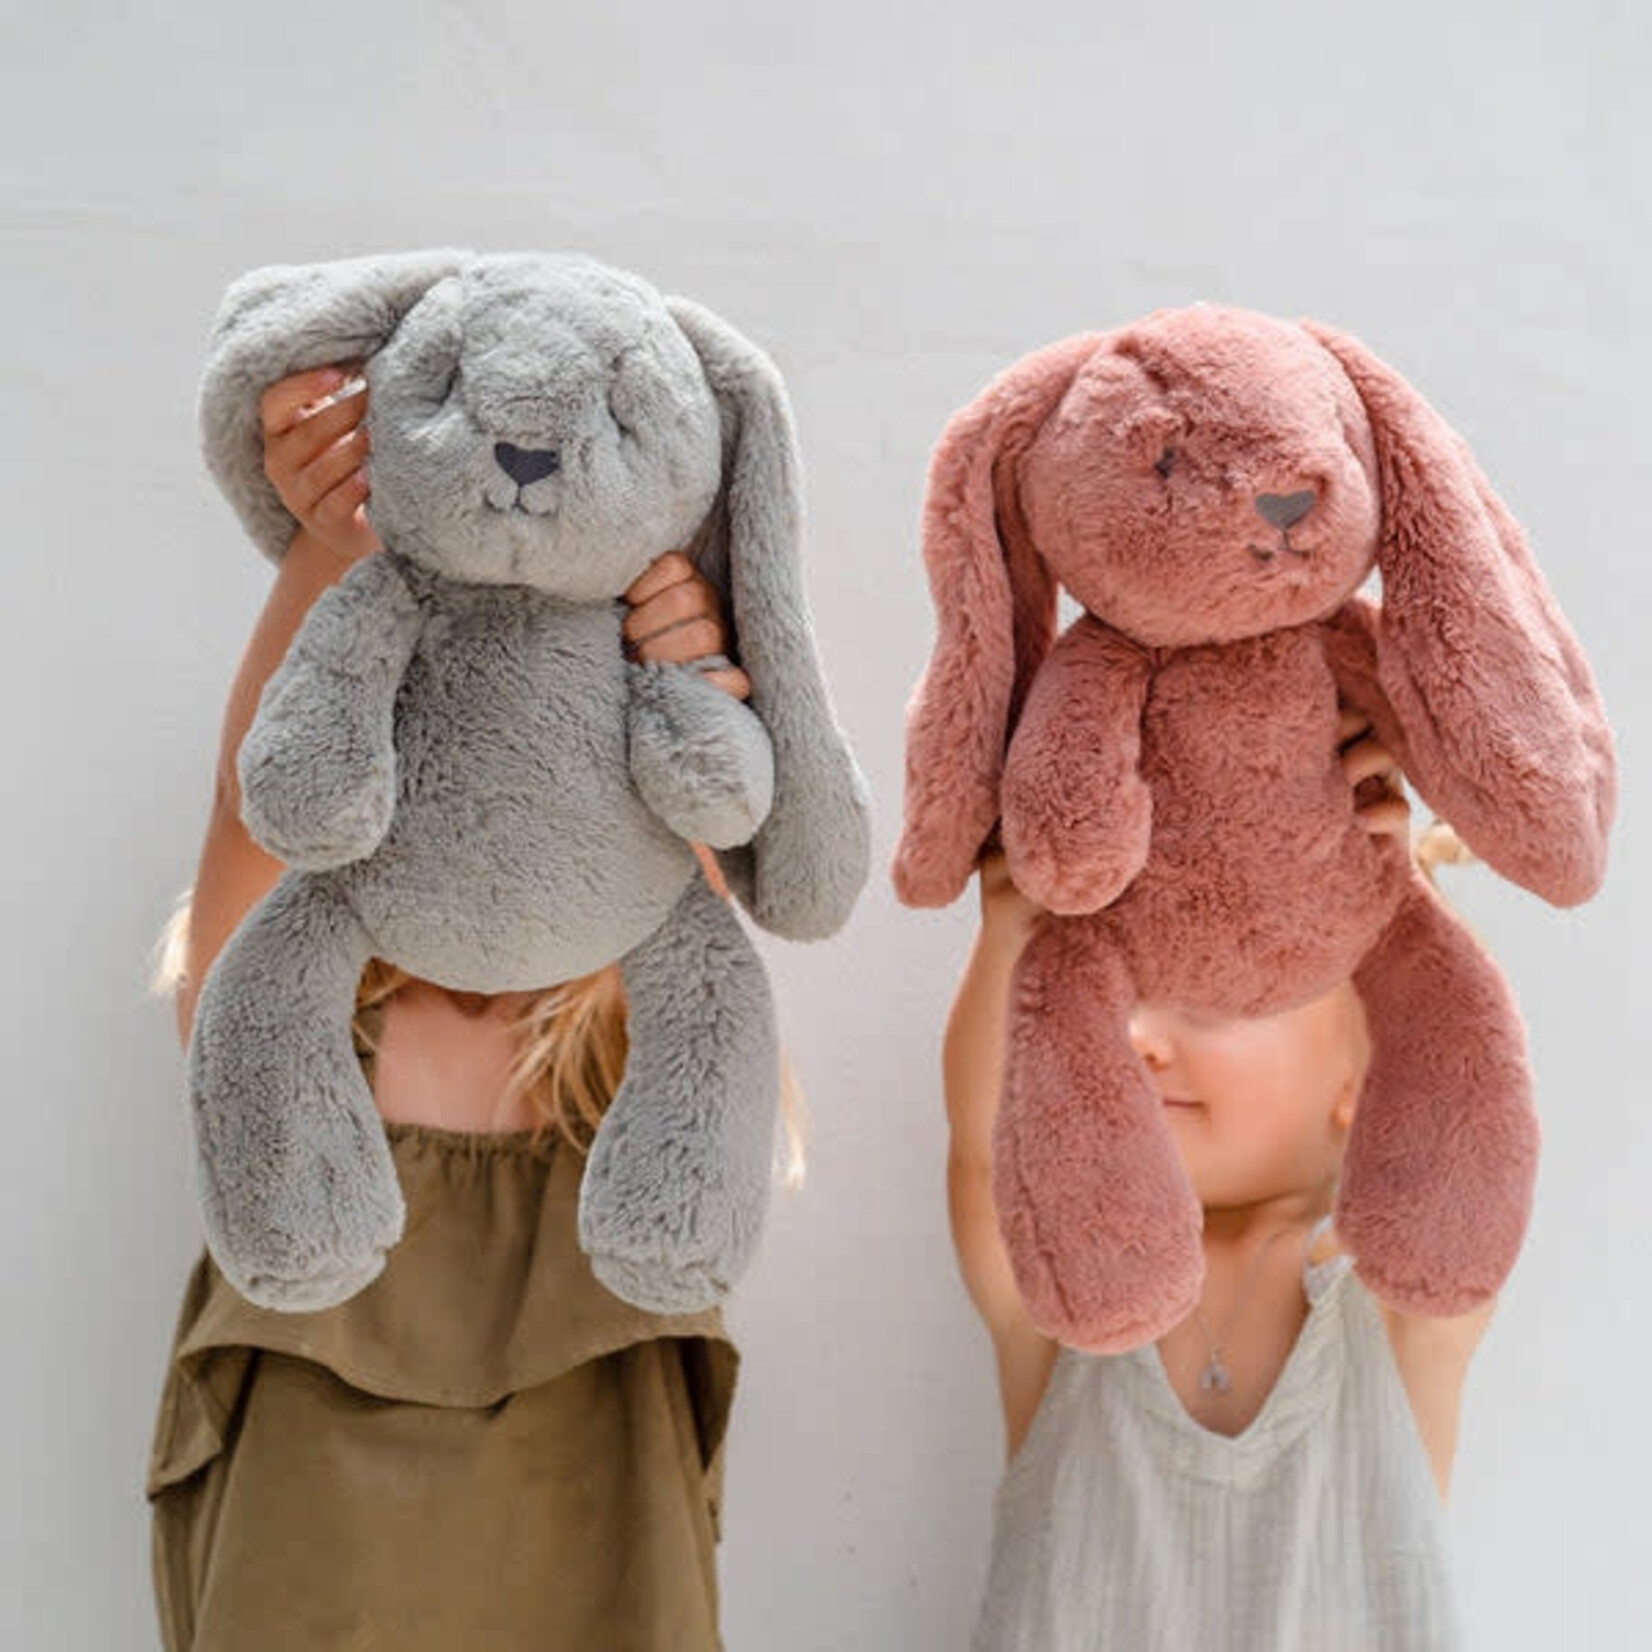 OB Designs Stuffed Animals  Grey Bunny - Bodhi Bunny Huggie